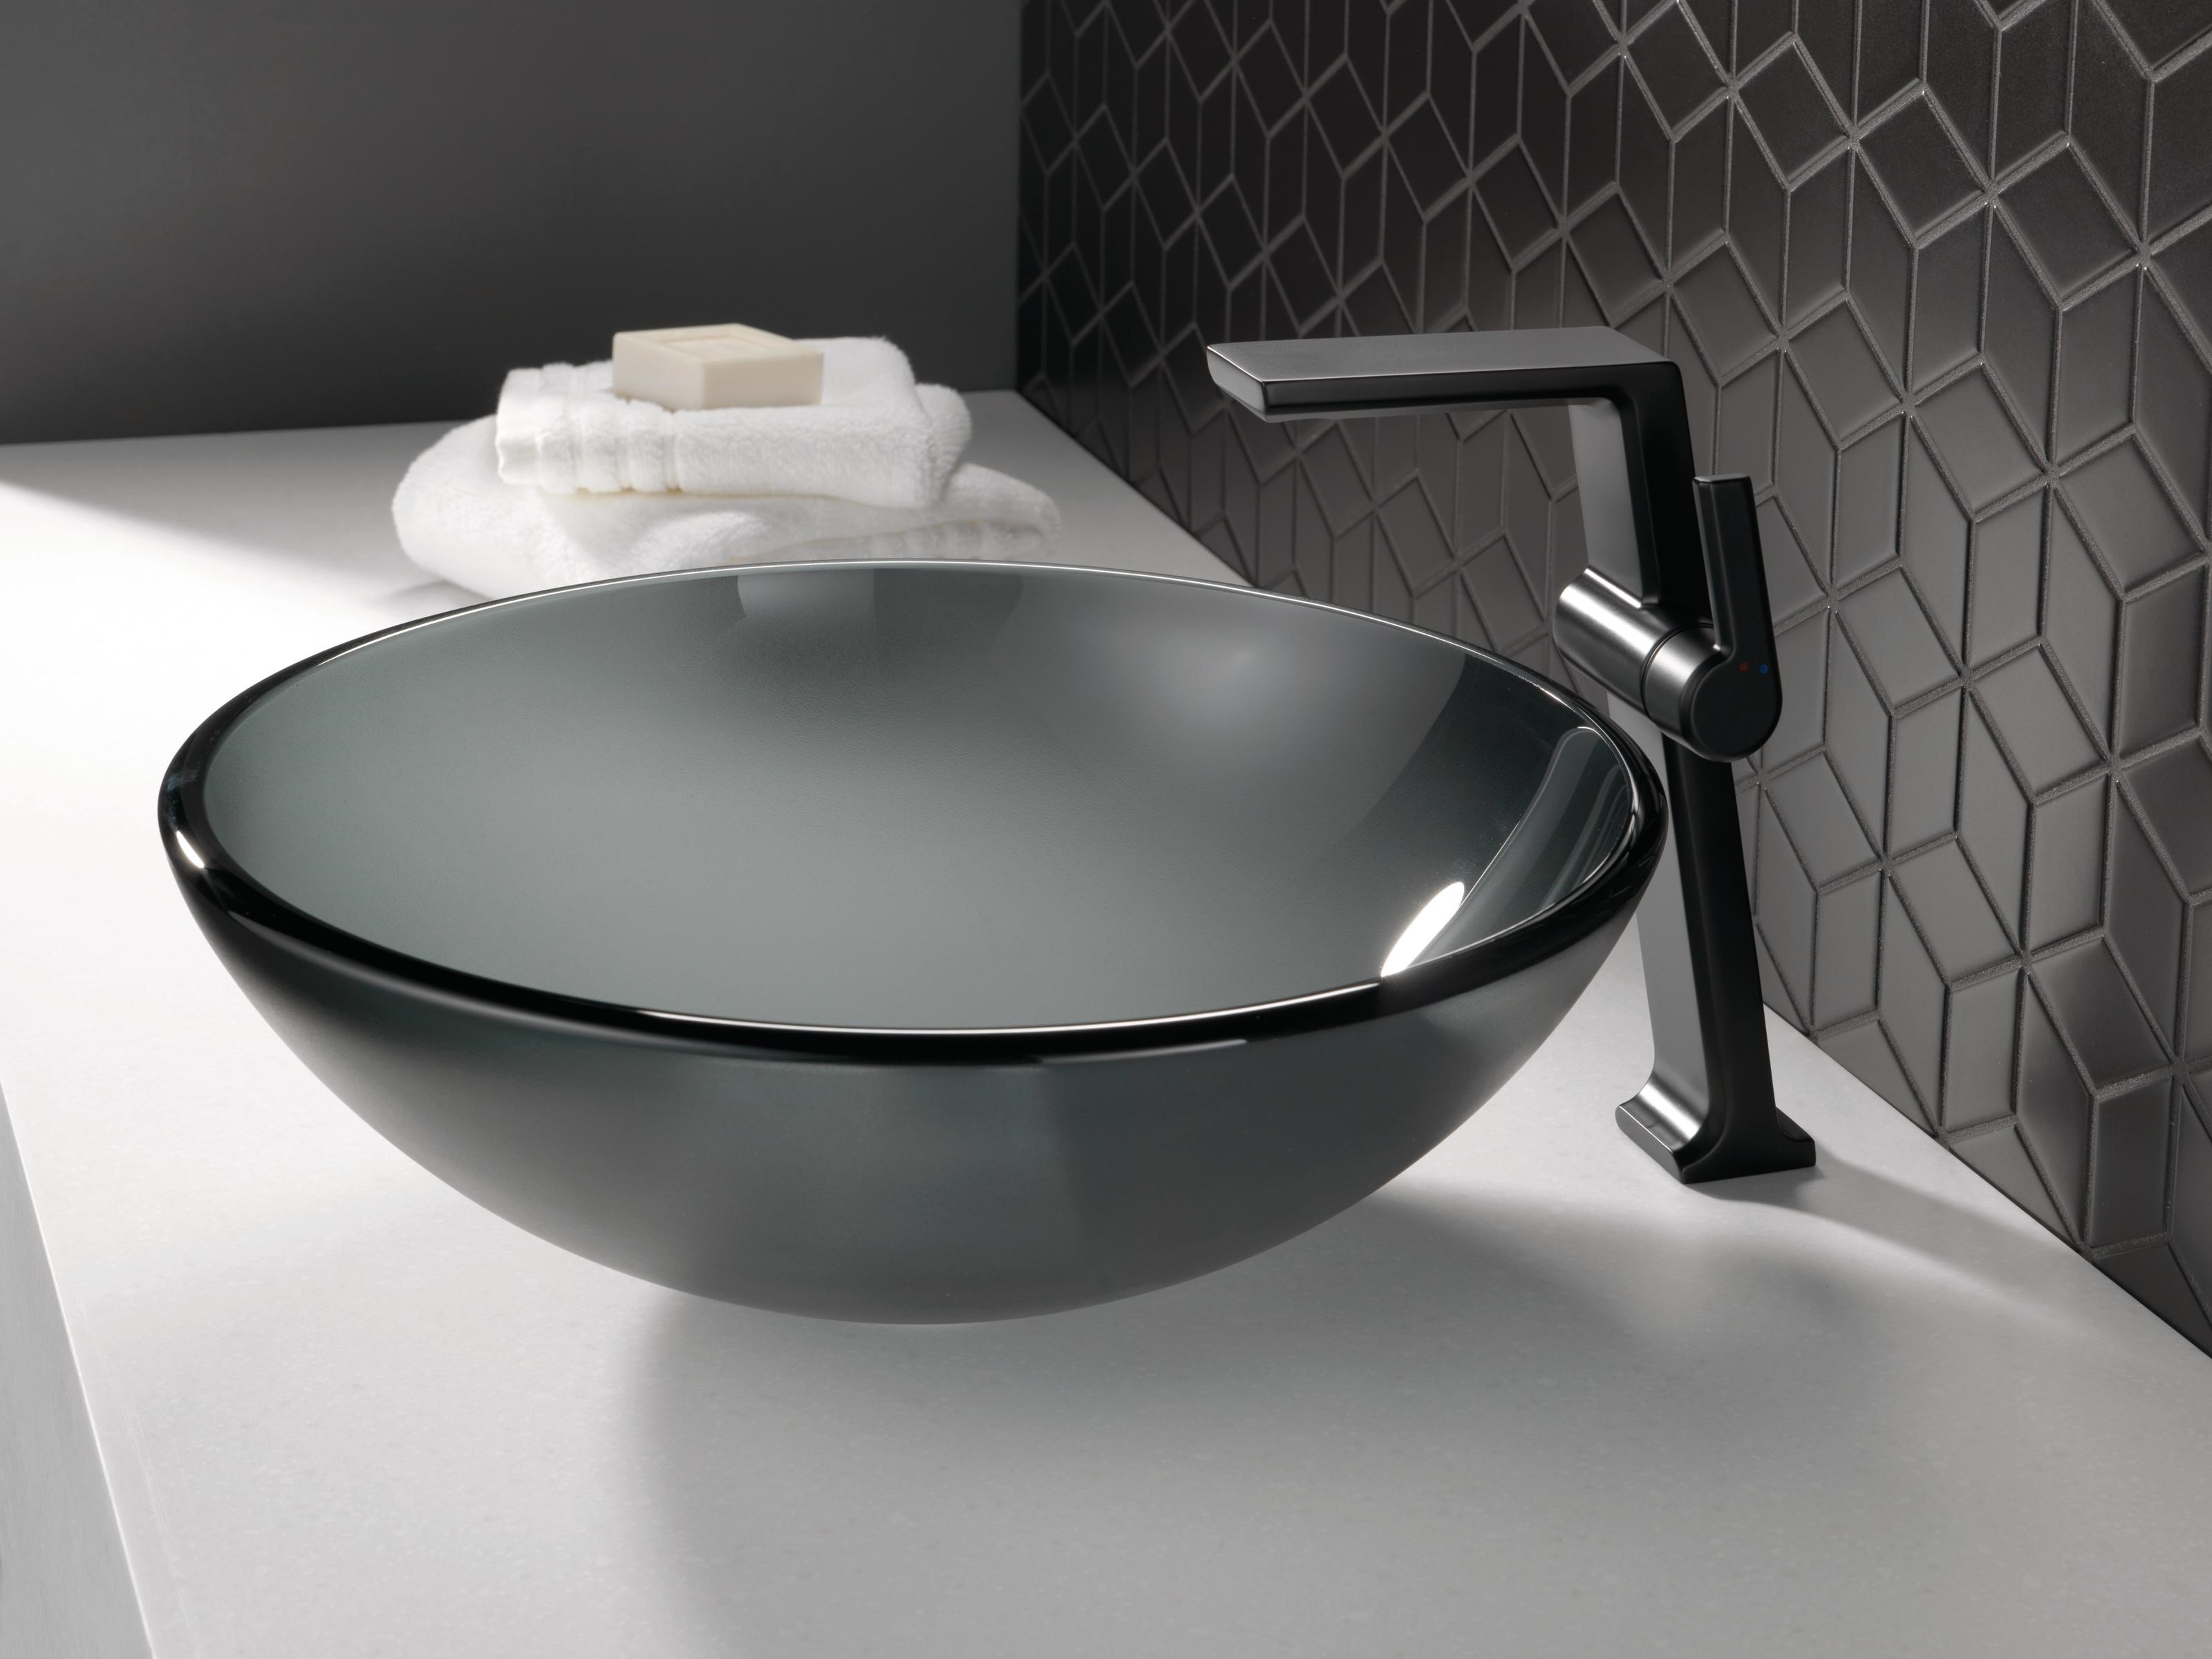 modern bathroom sink faucet ideas